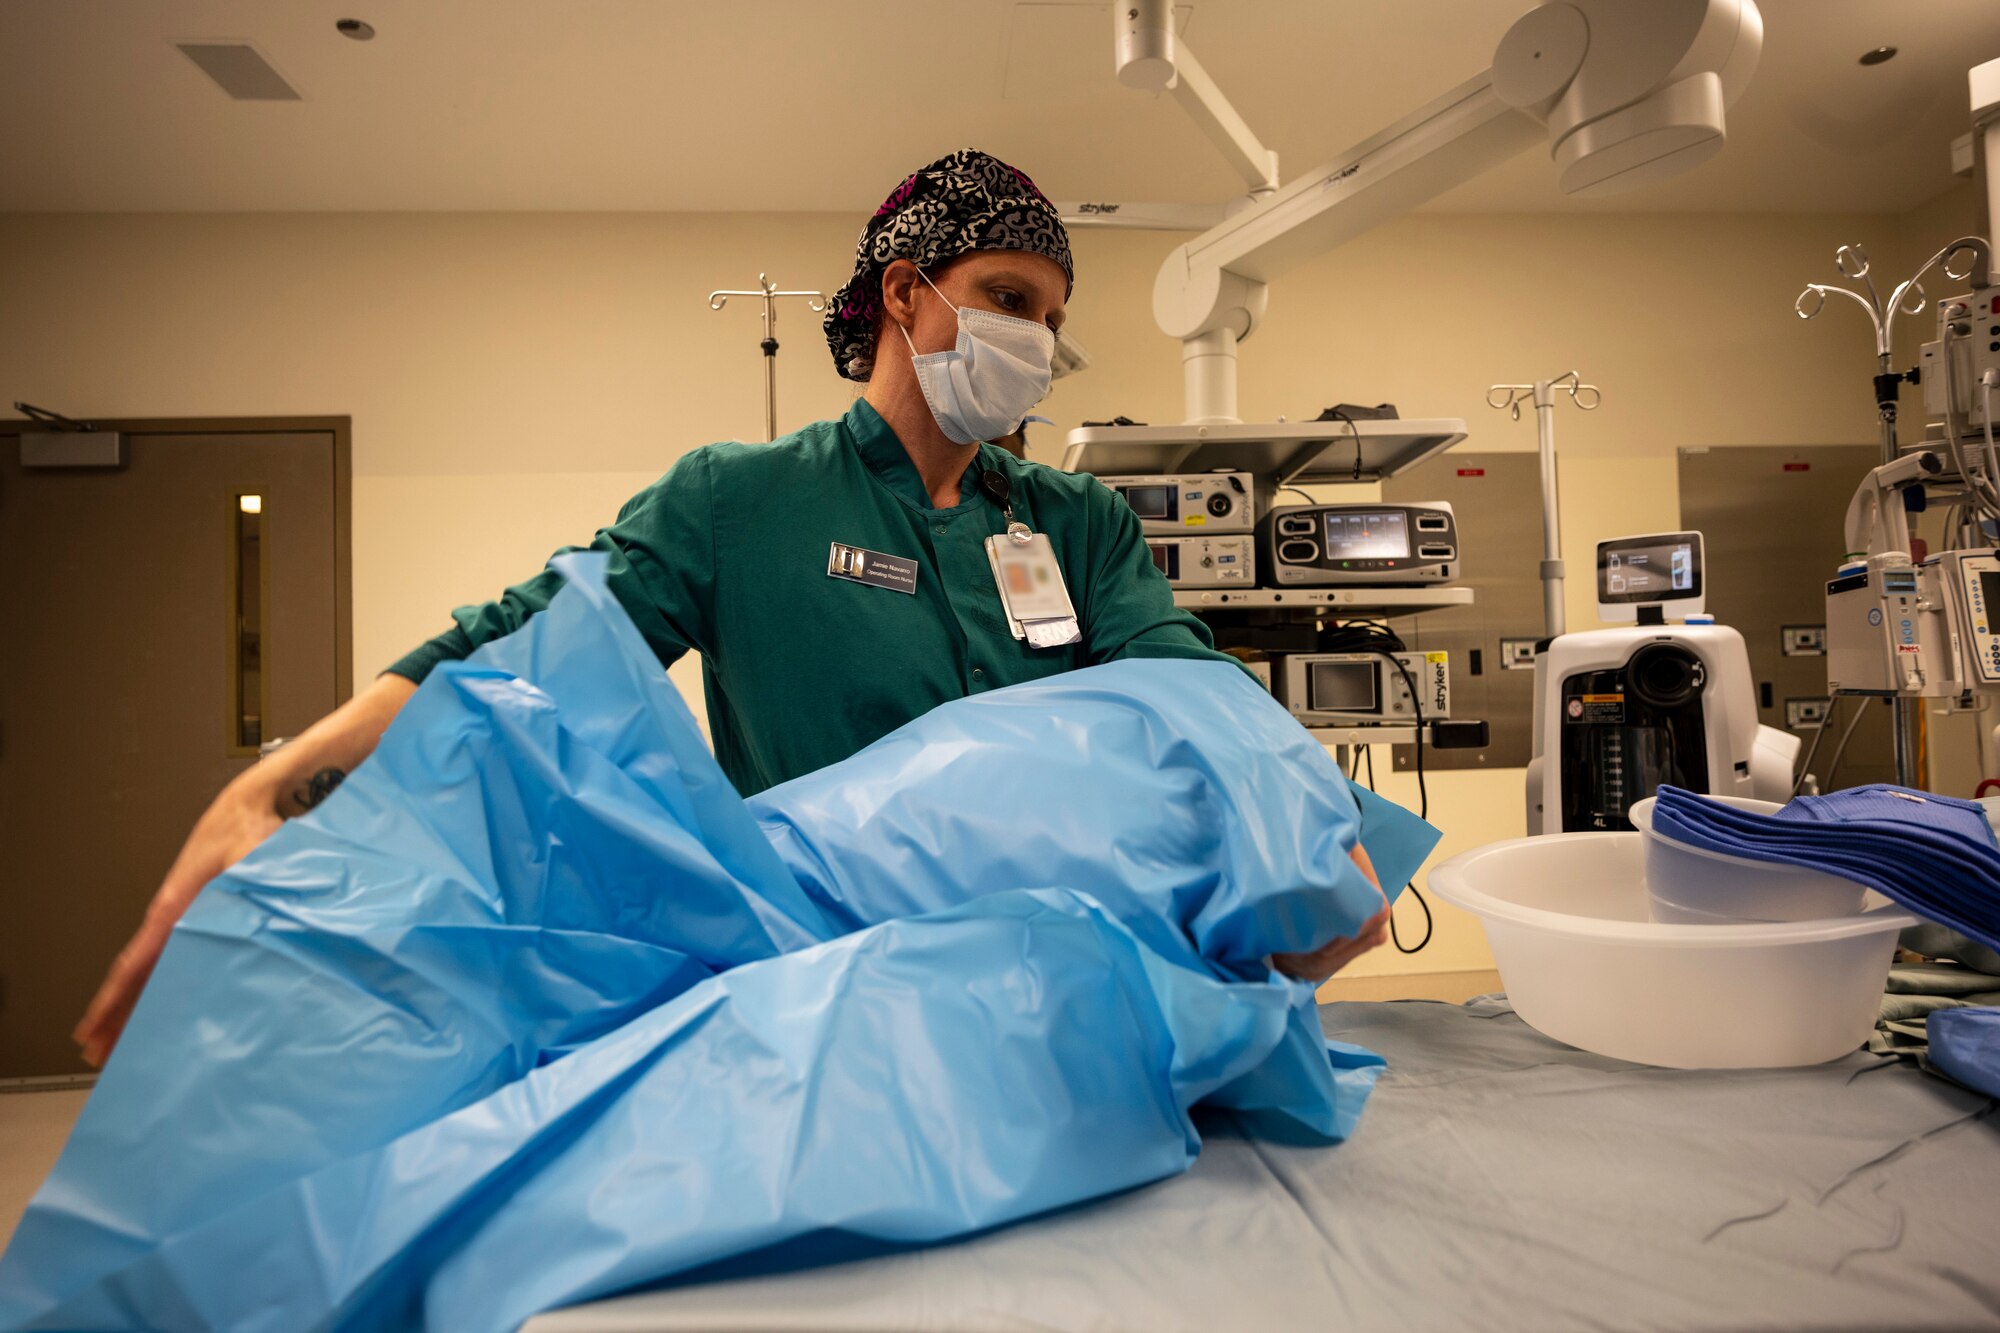 A woman wearing nurse scrubs preps an operating room table.